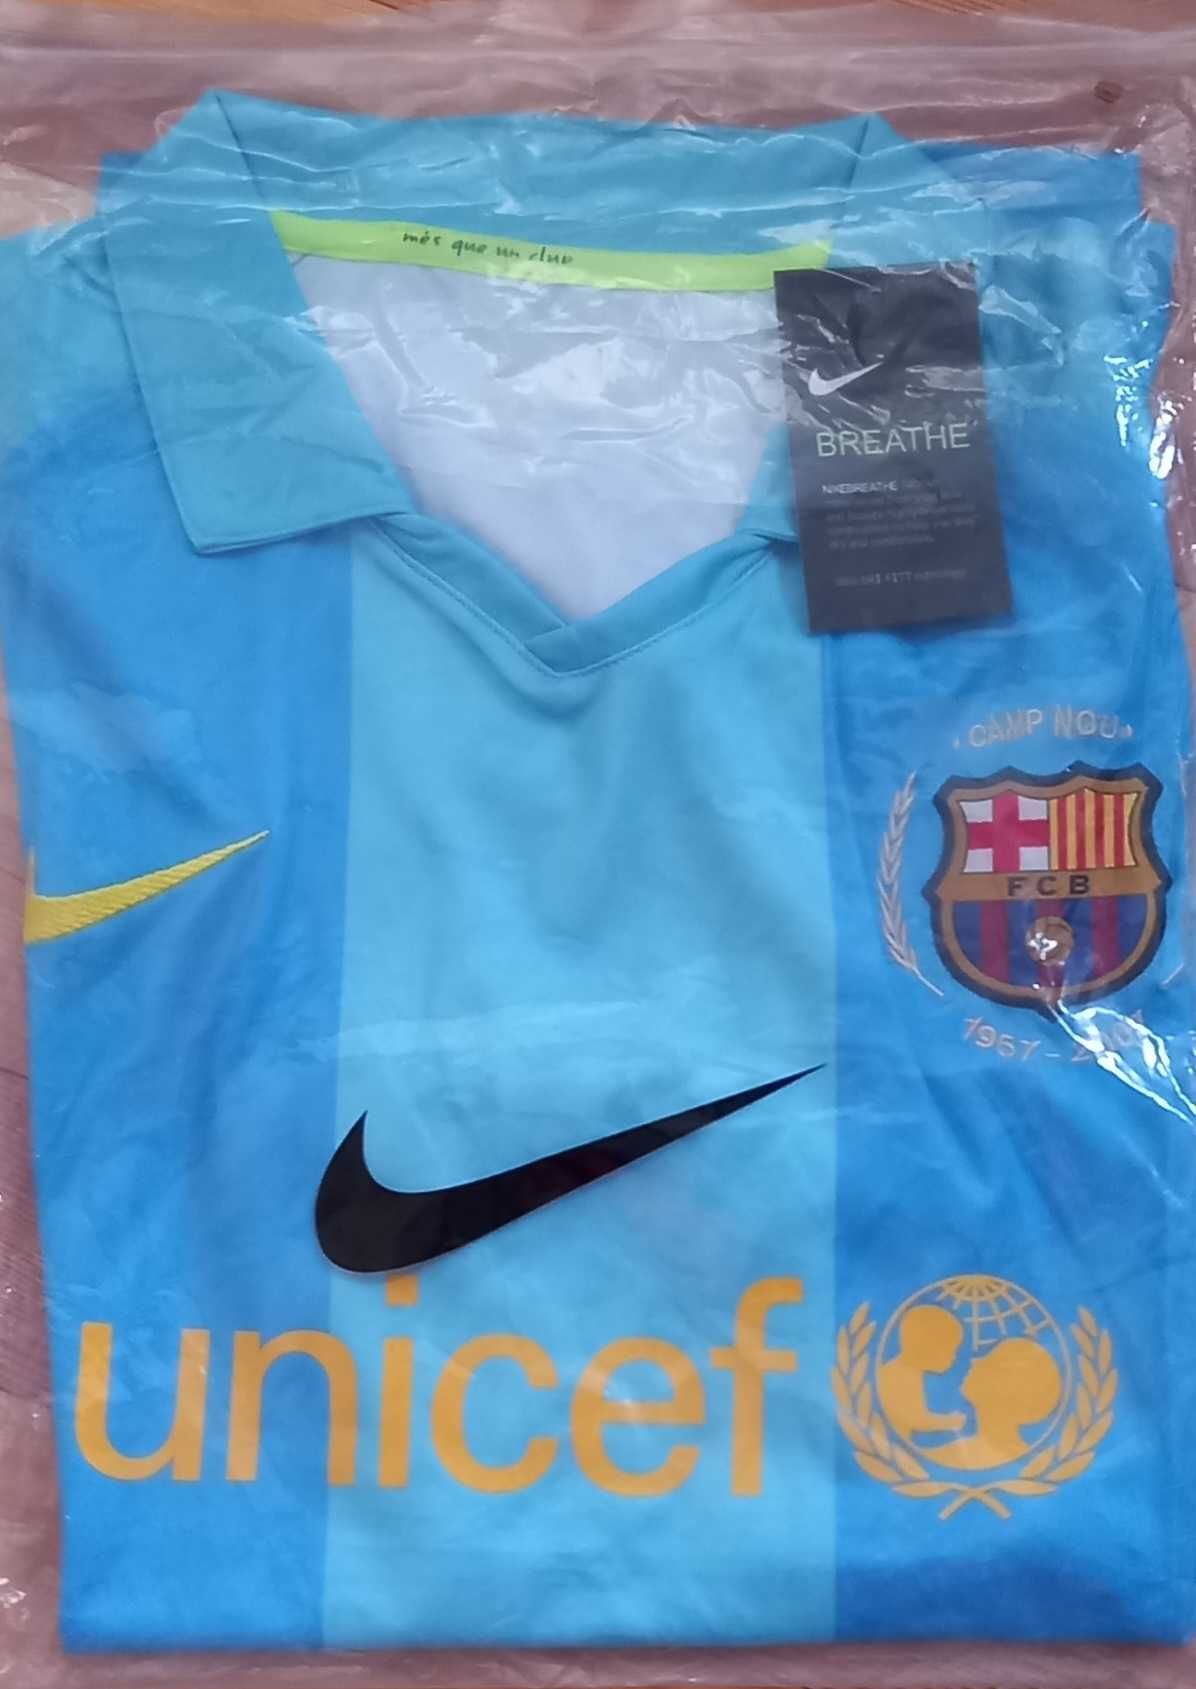 Koszulka FC Barcelona, model retro, 2007/08, Nike, nowa, błękitna